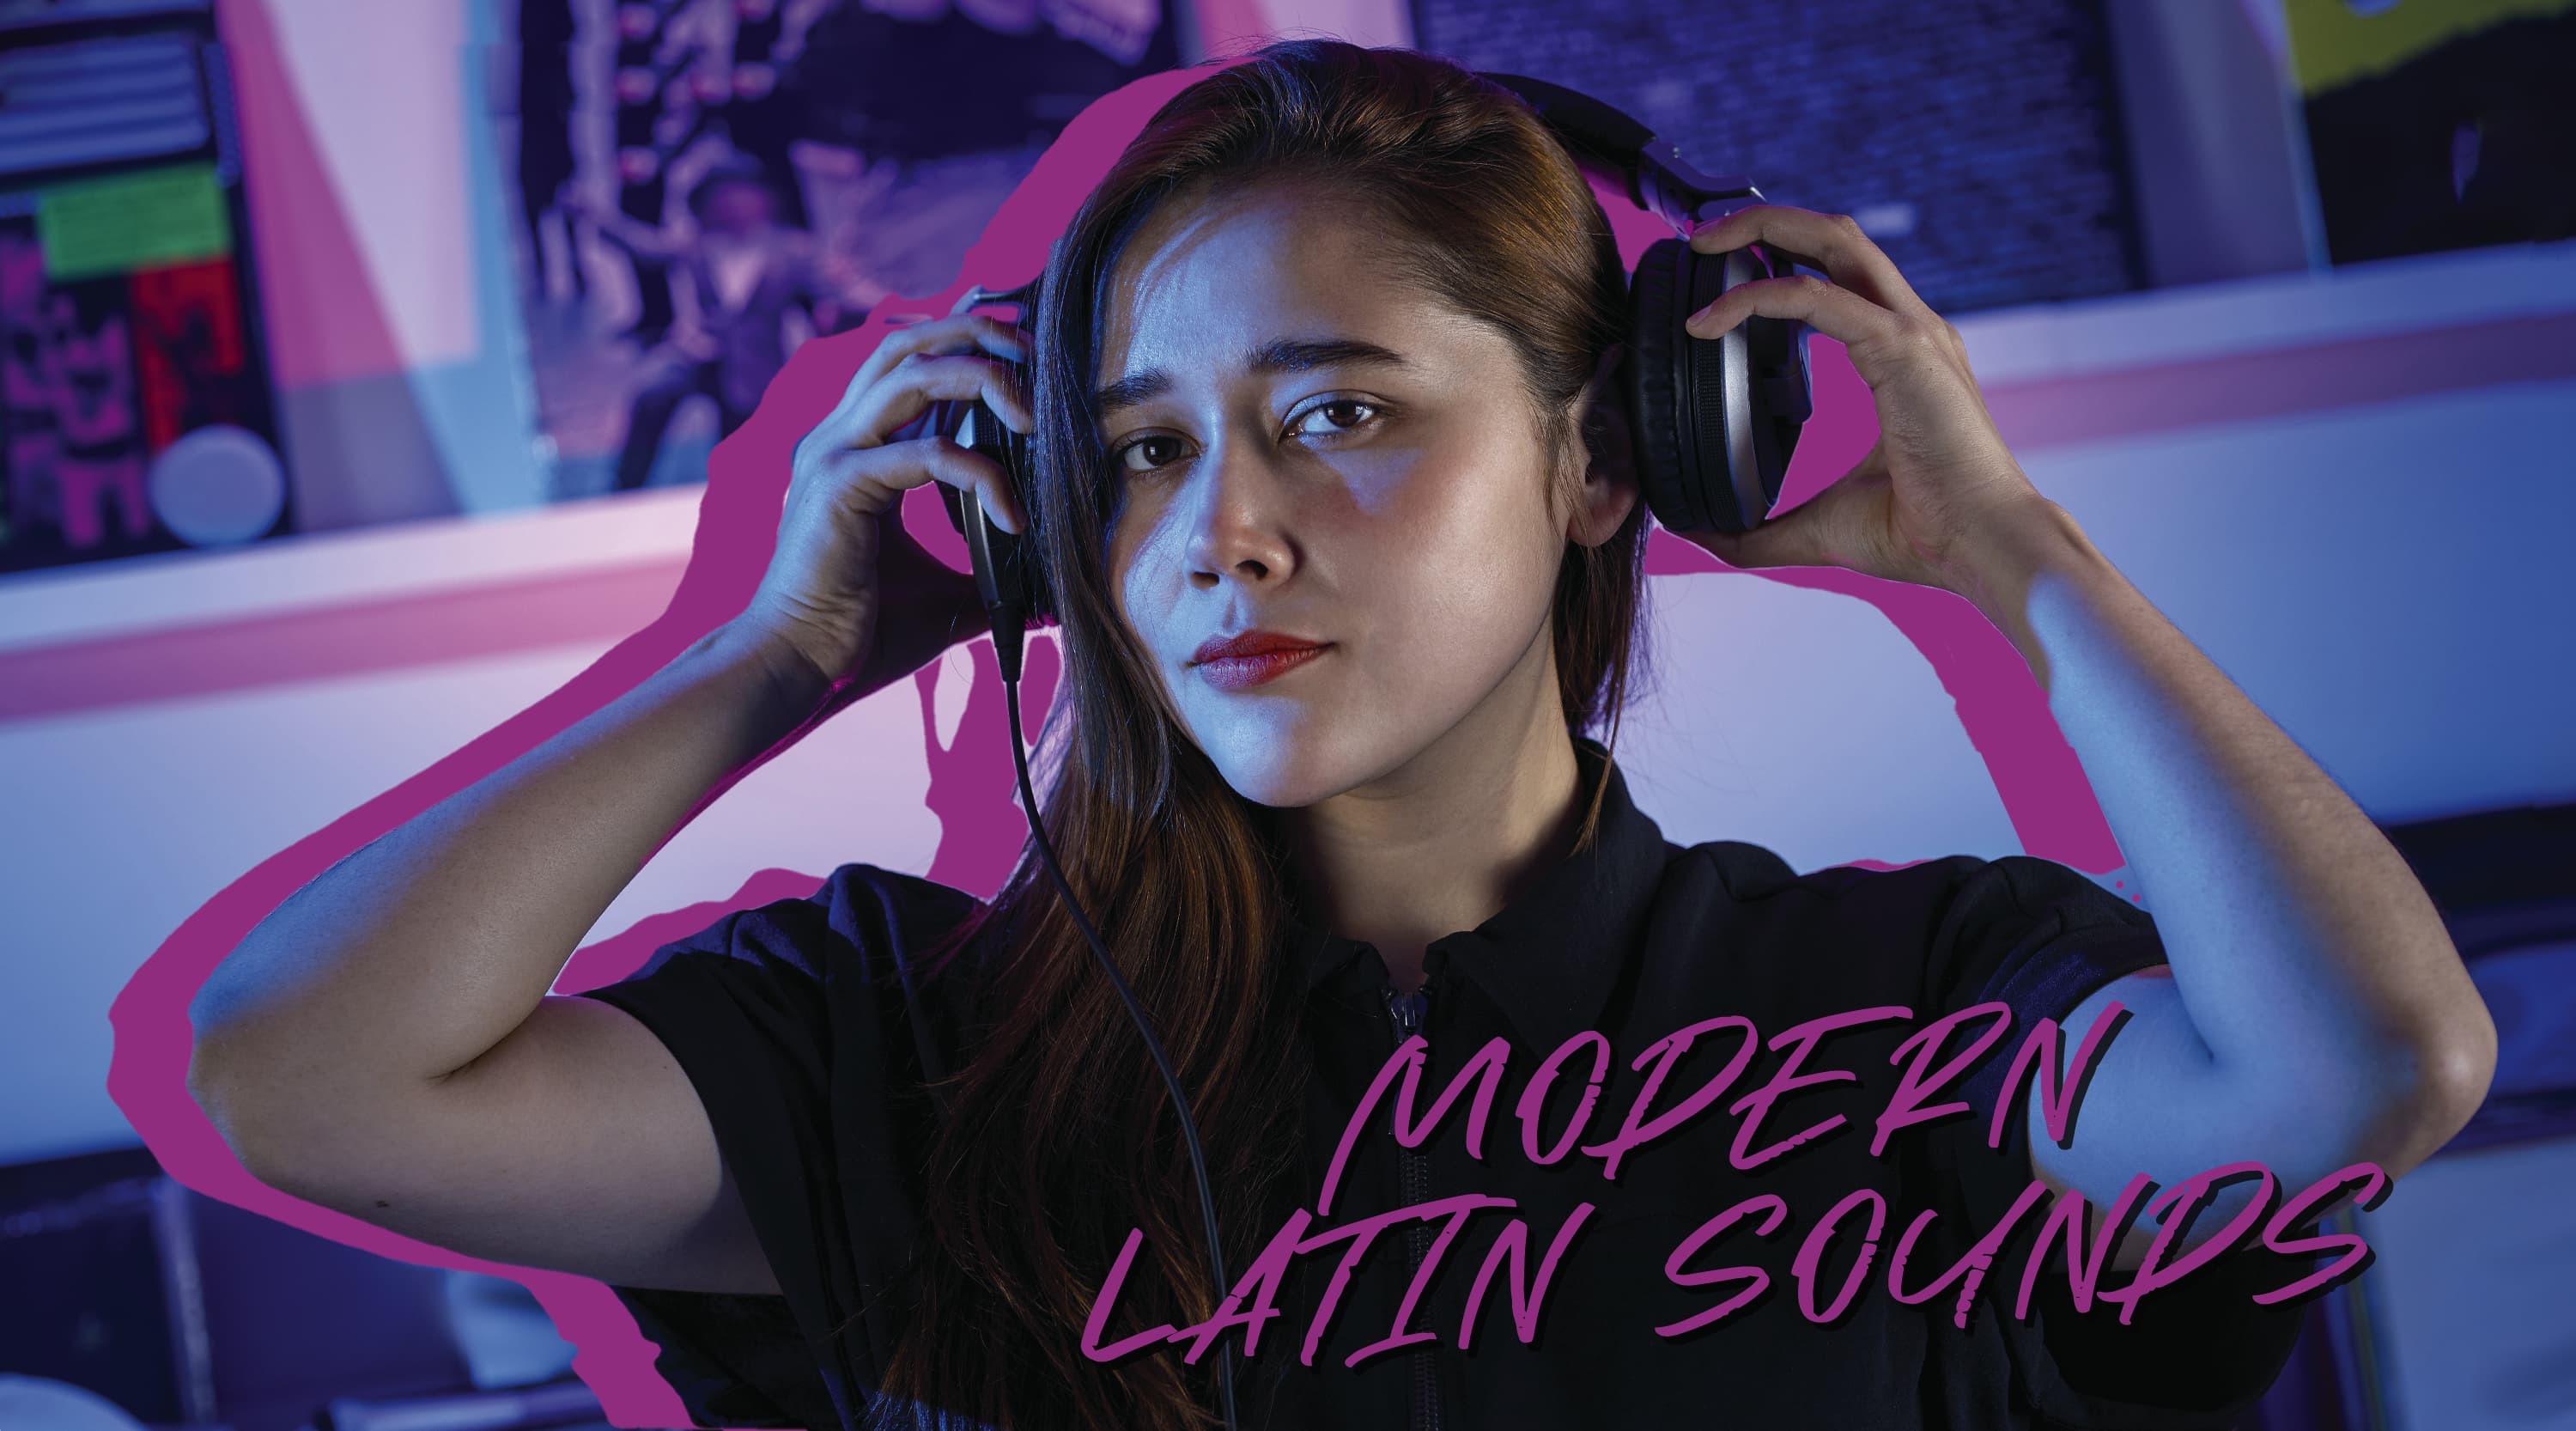 Modern Latin Sounds